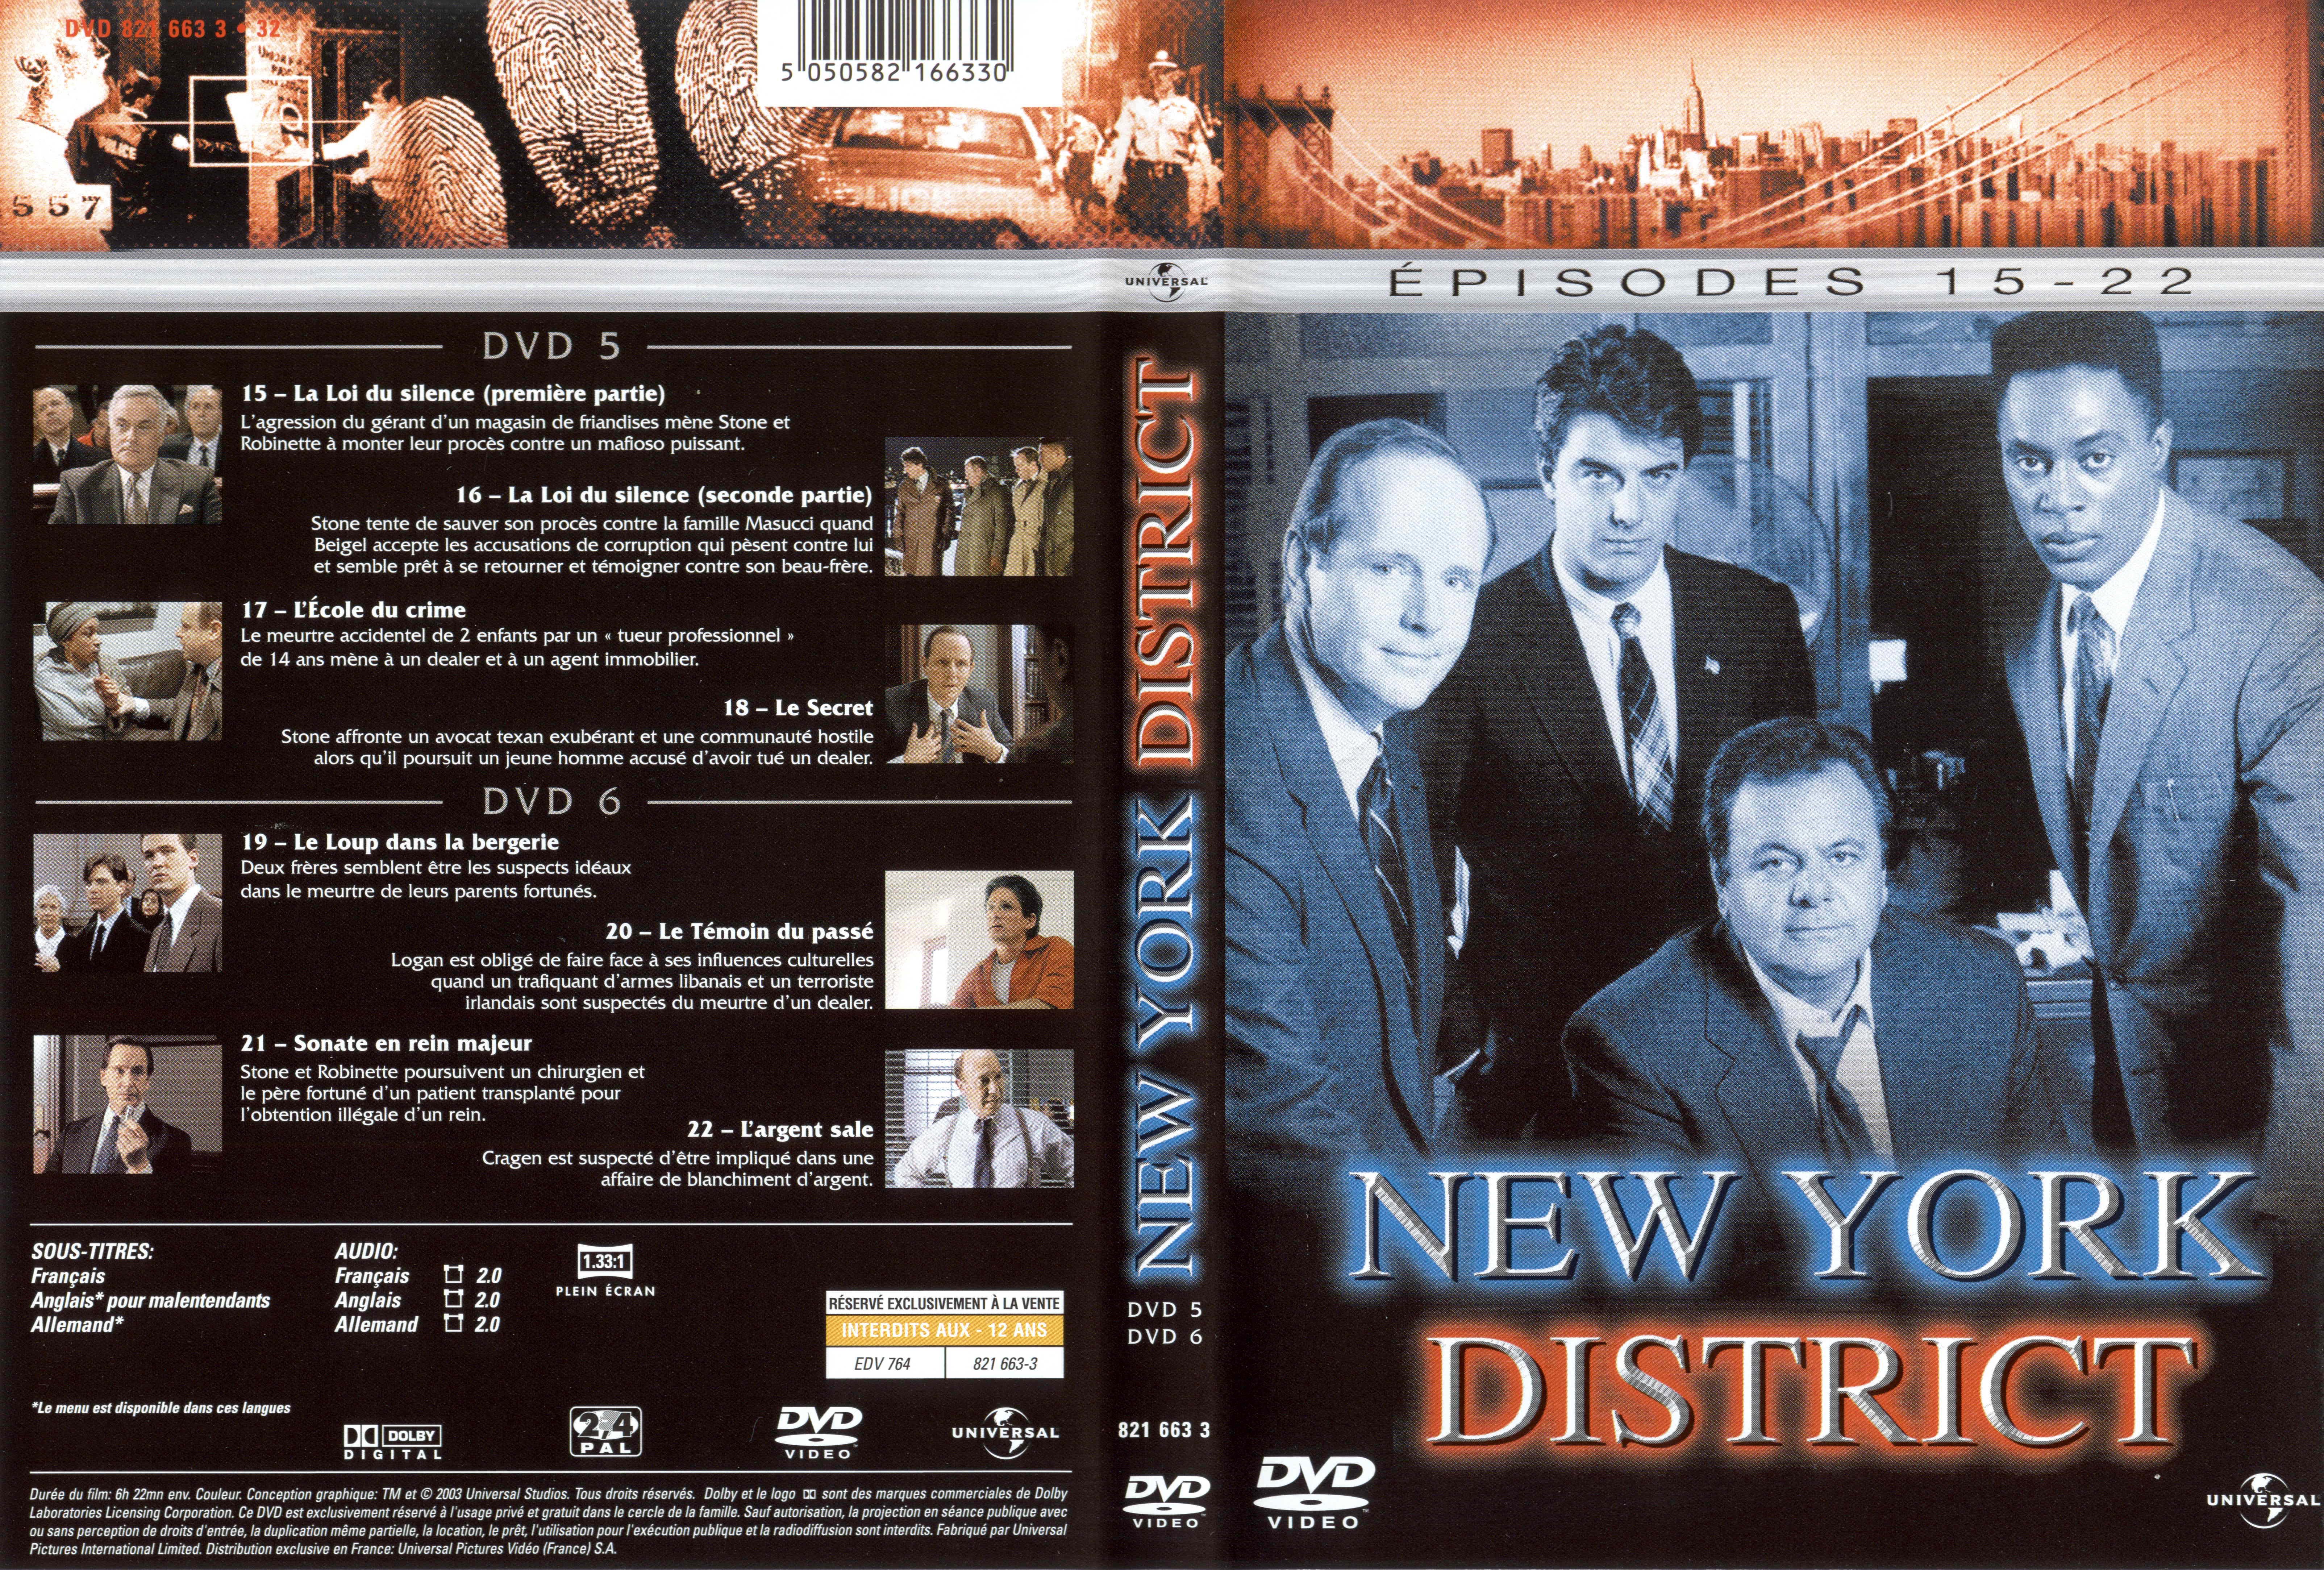 Jaquette DVD New York district Saison 1 DVD 3